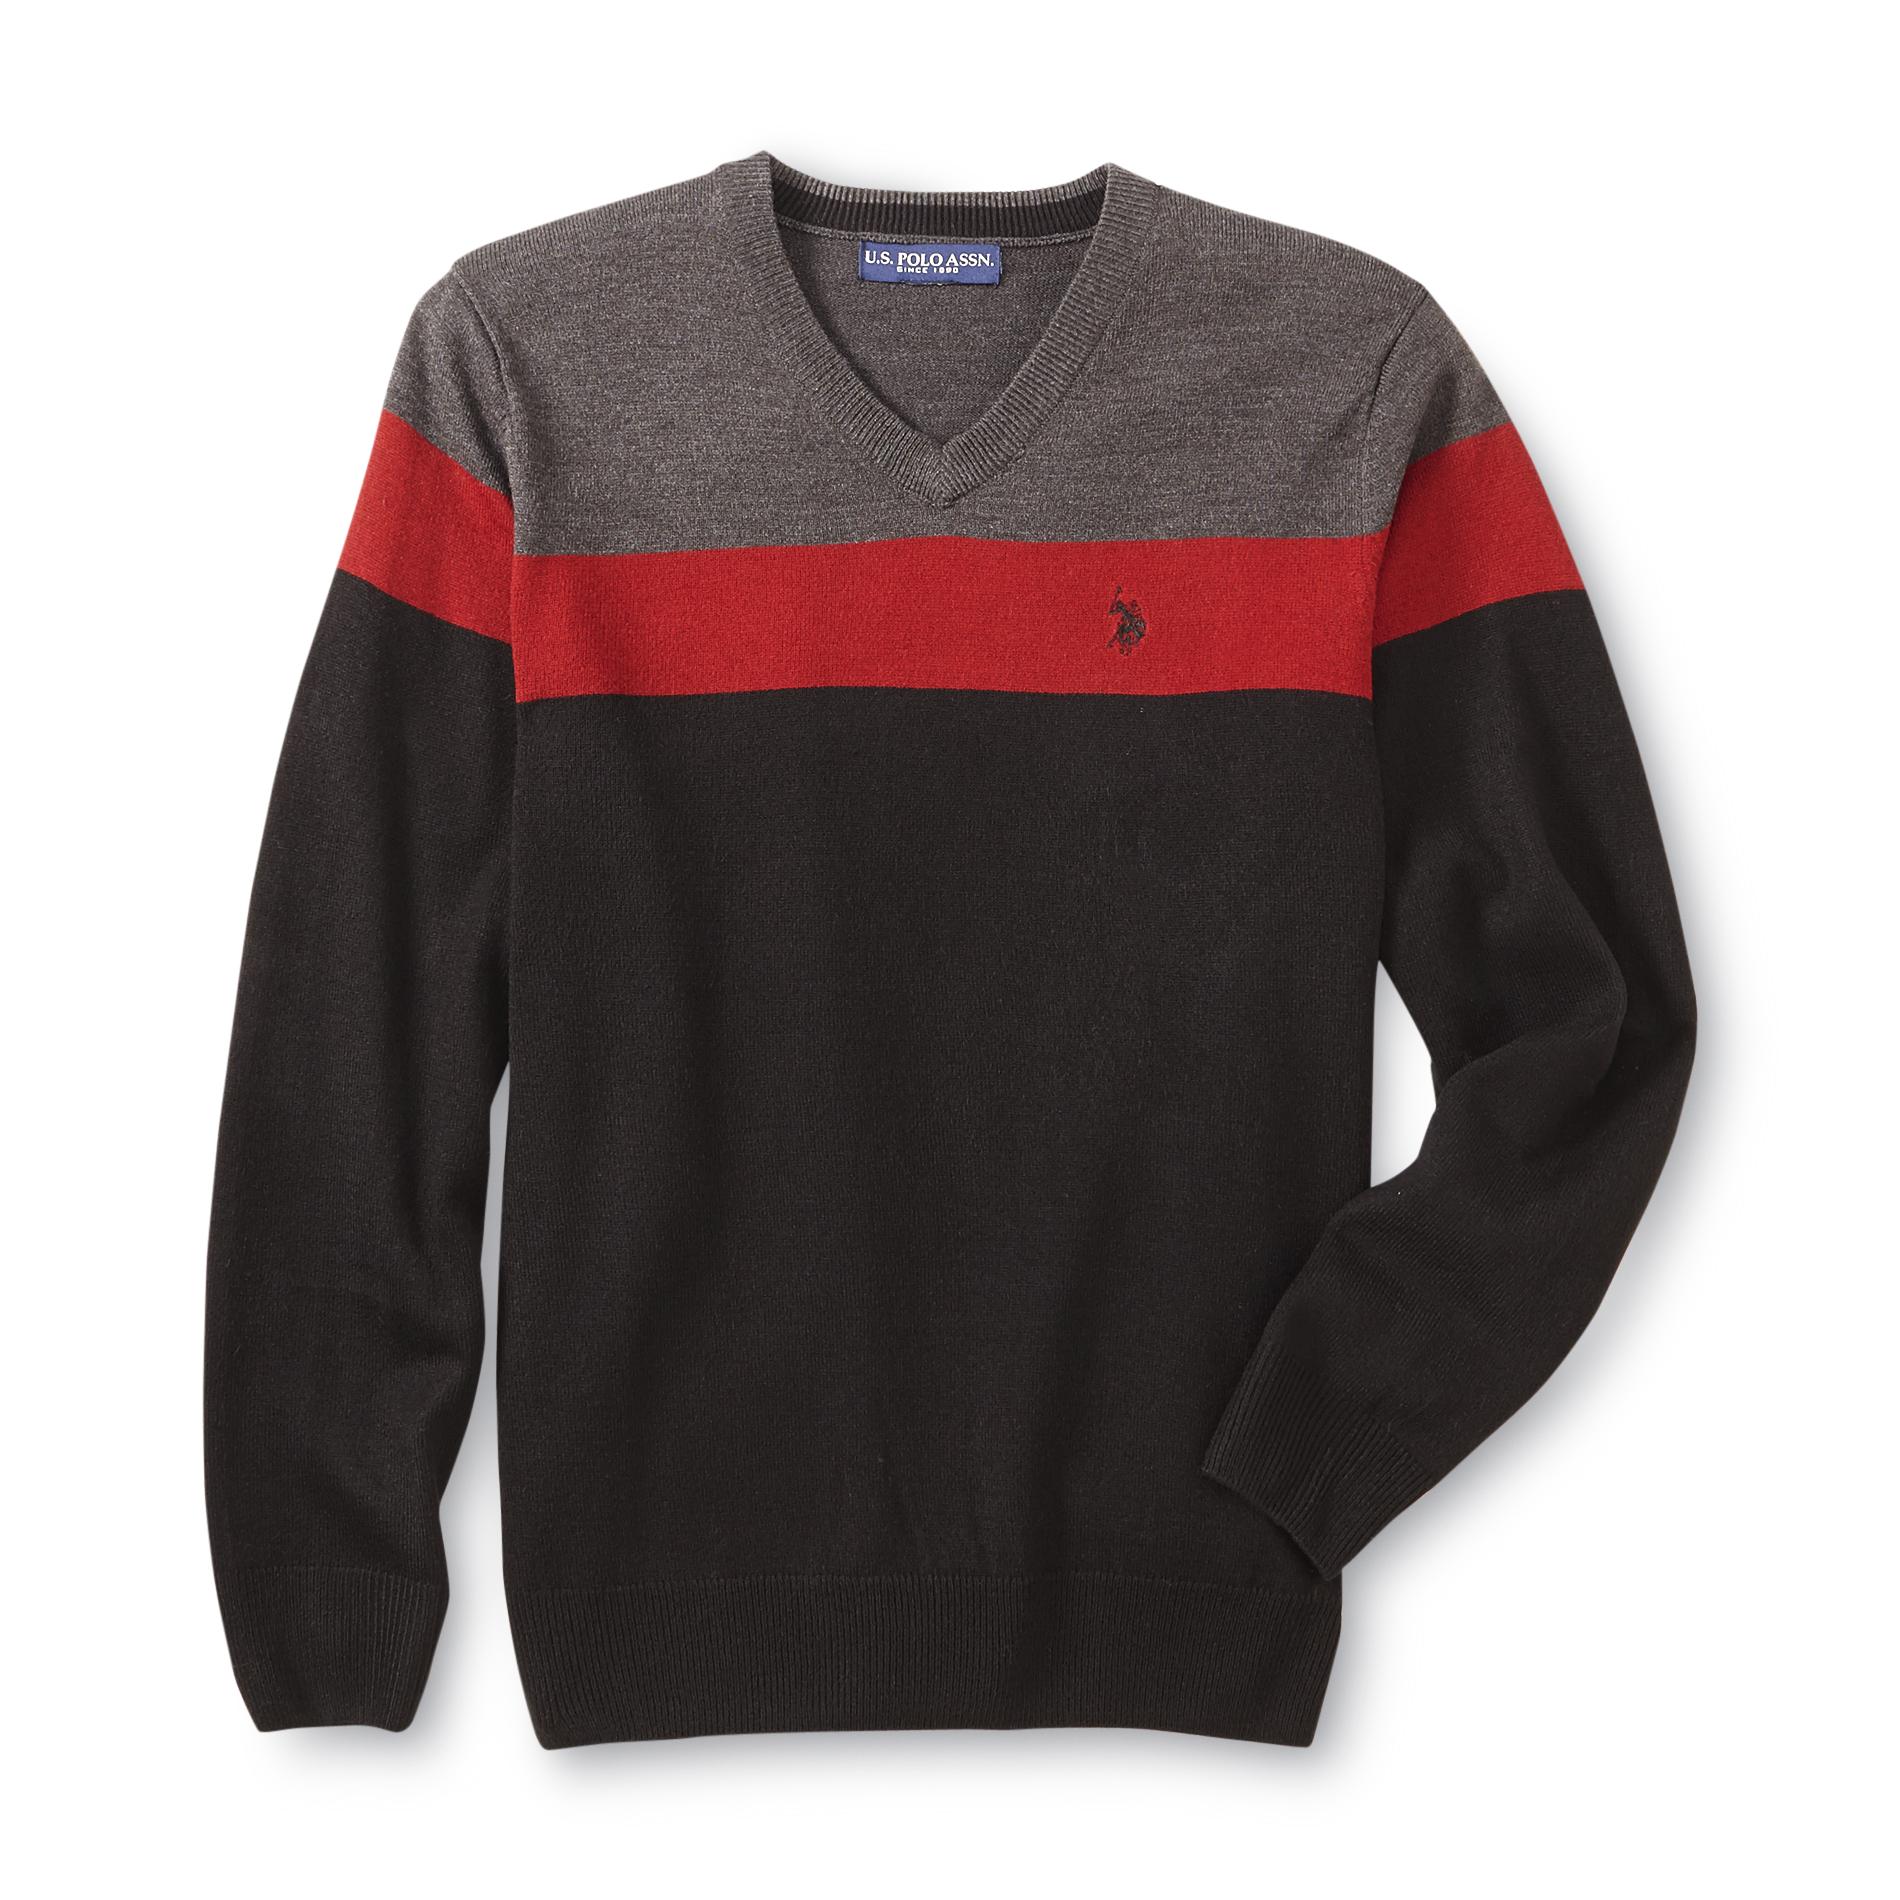 U.S. Polo Assn. Men's V-Neck Sweater - Colorblock